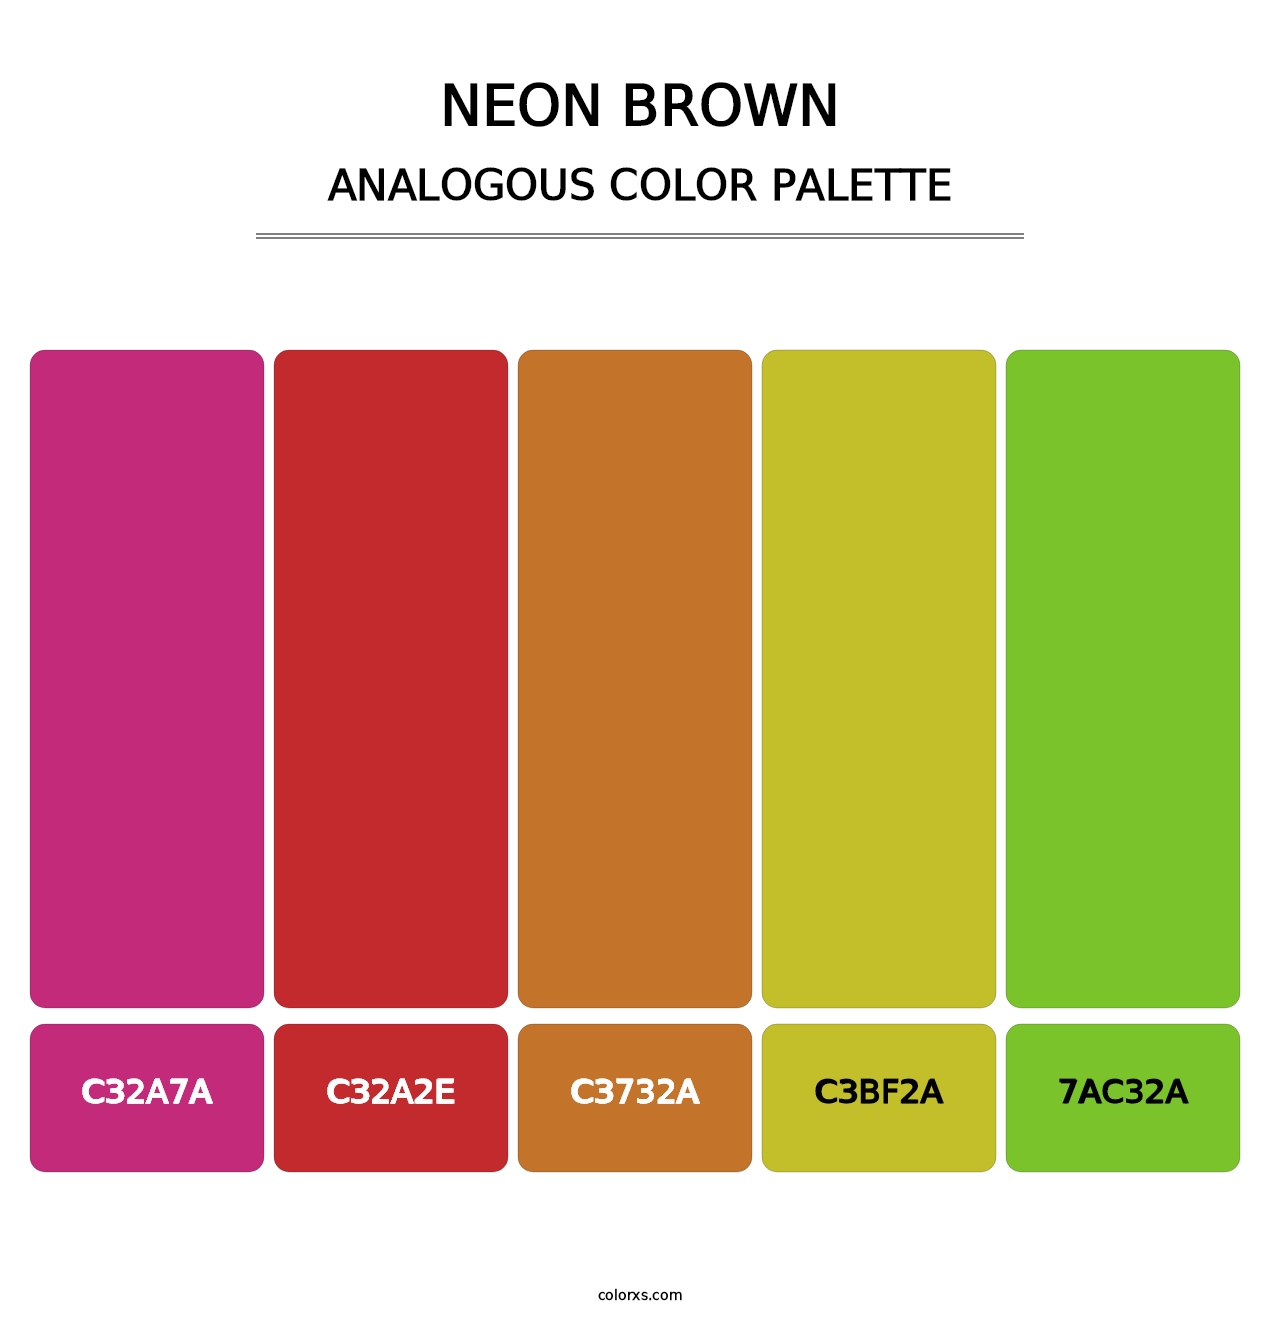 Neon Brown - Analogous Color Palette